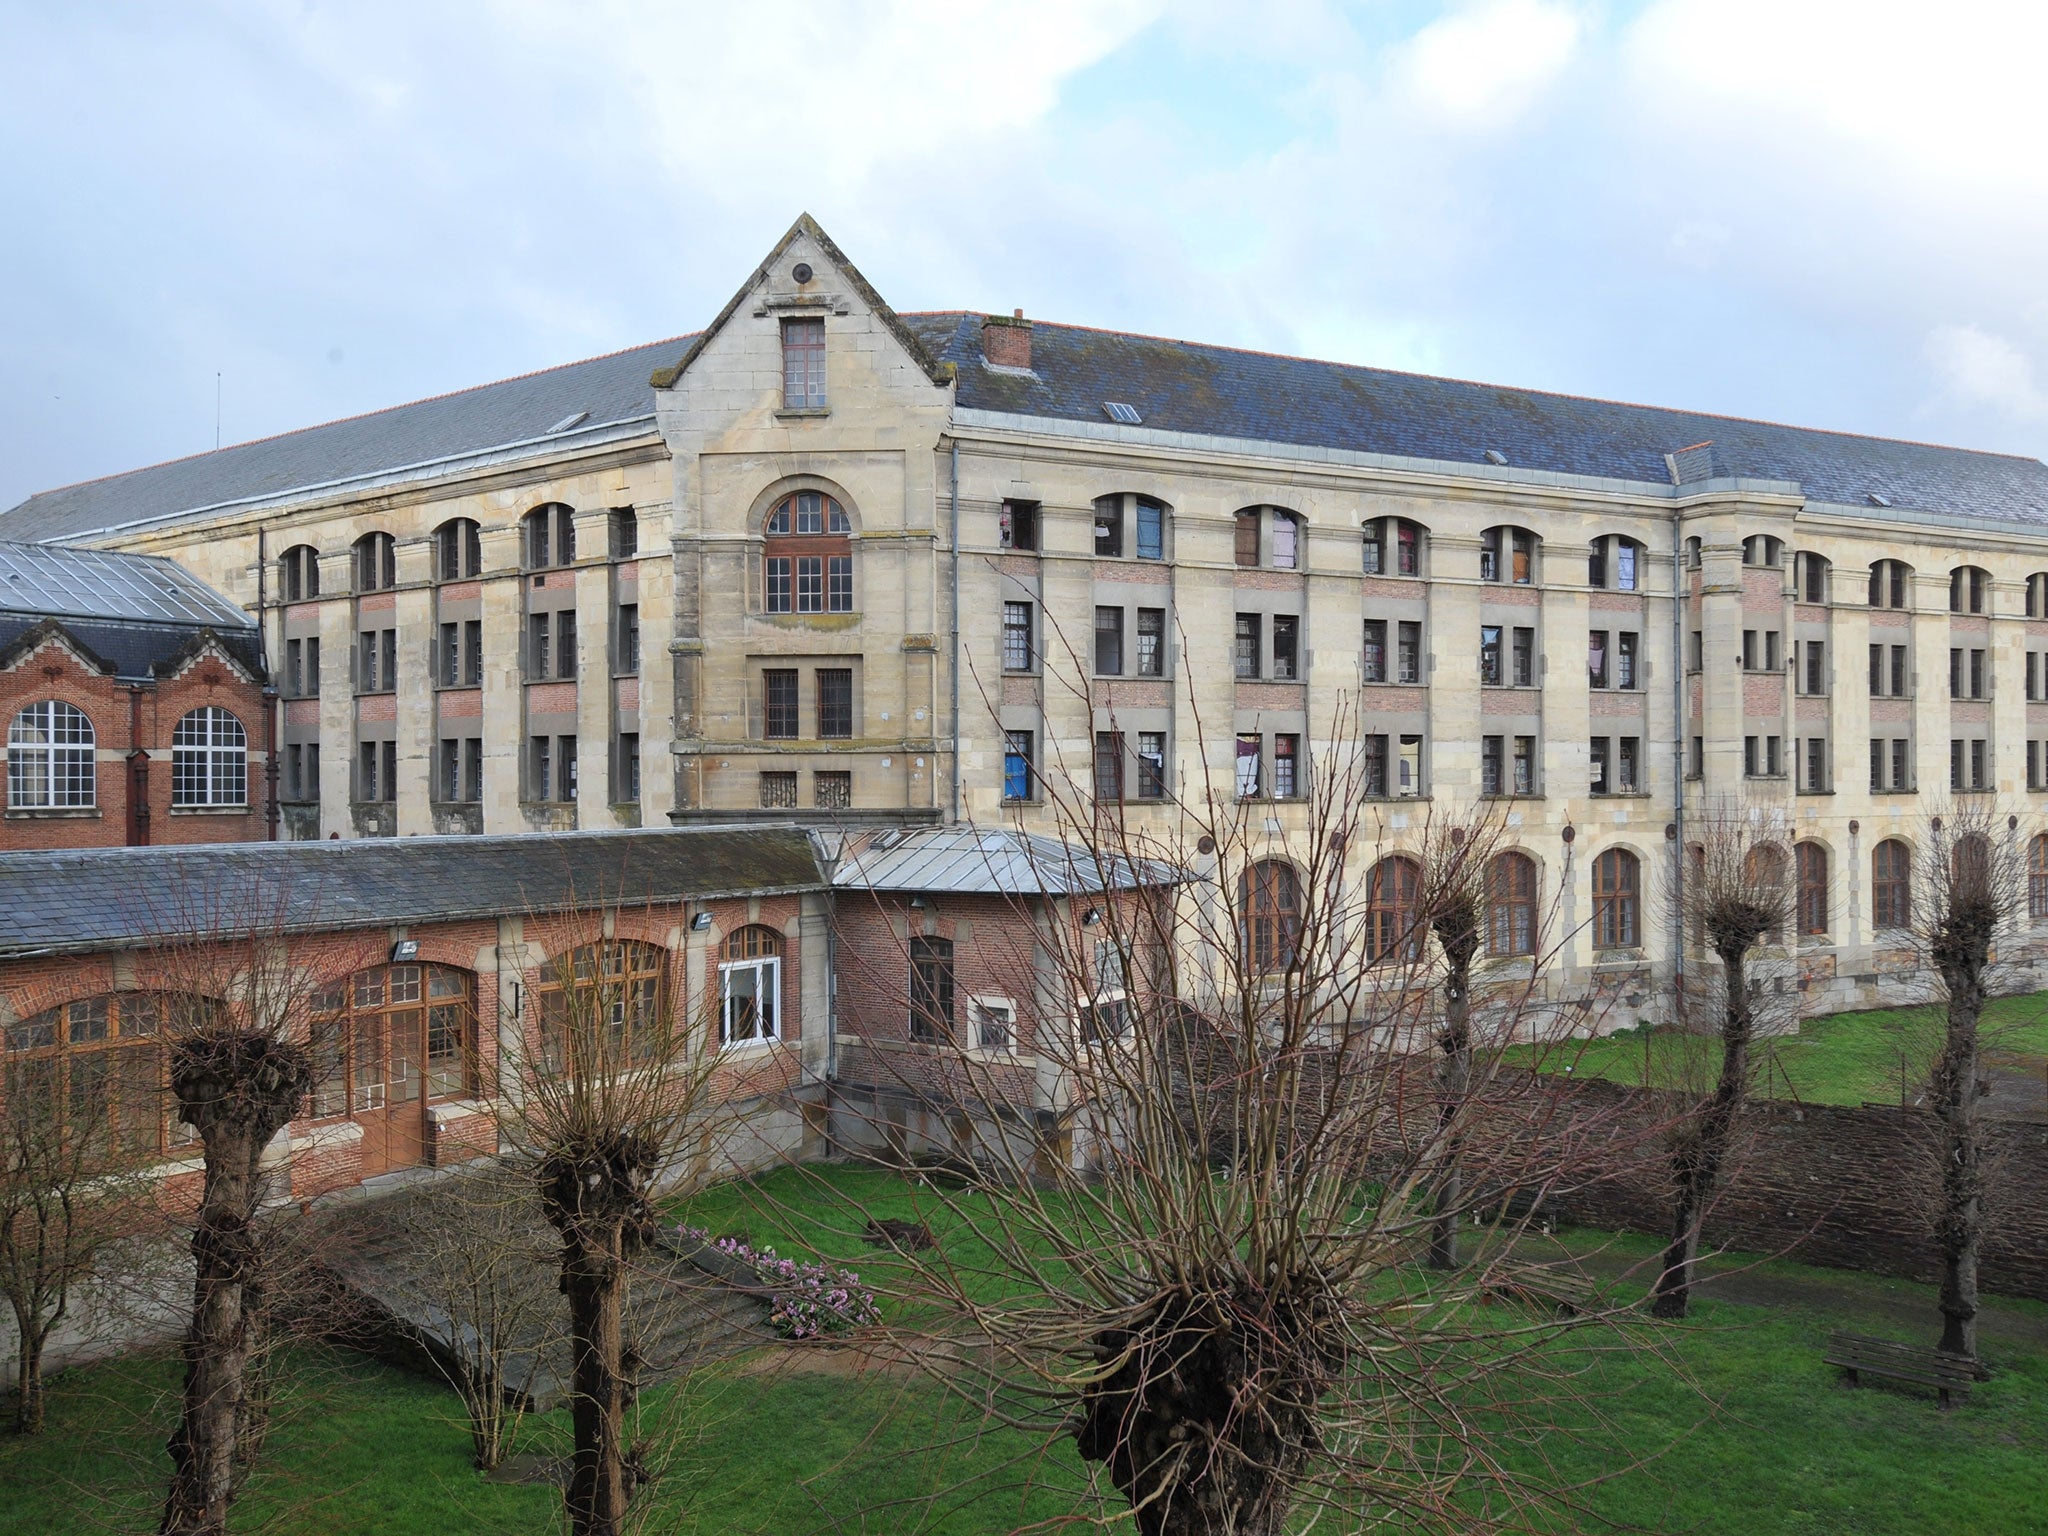 Centre penitentiaire de Rennes, a women's prison in France